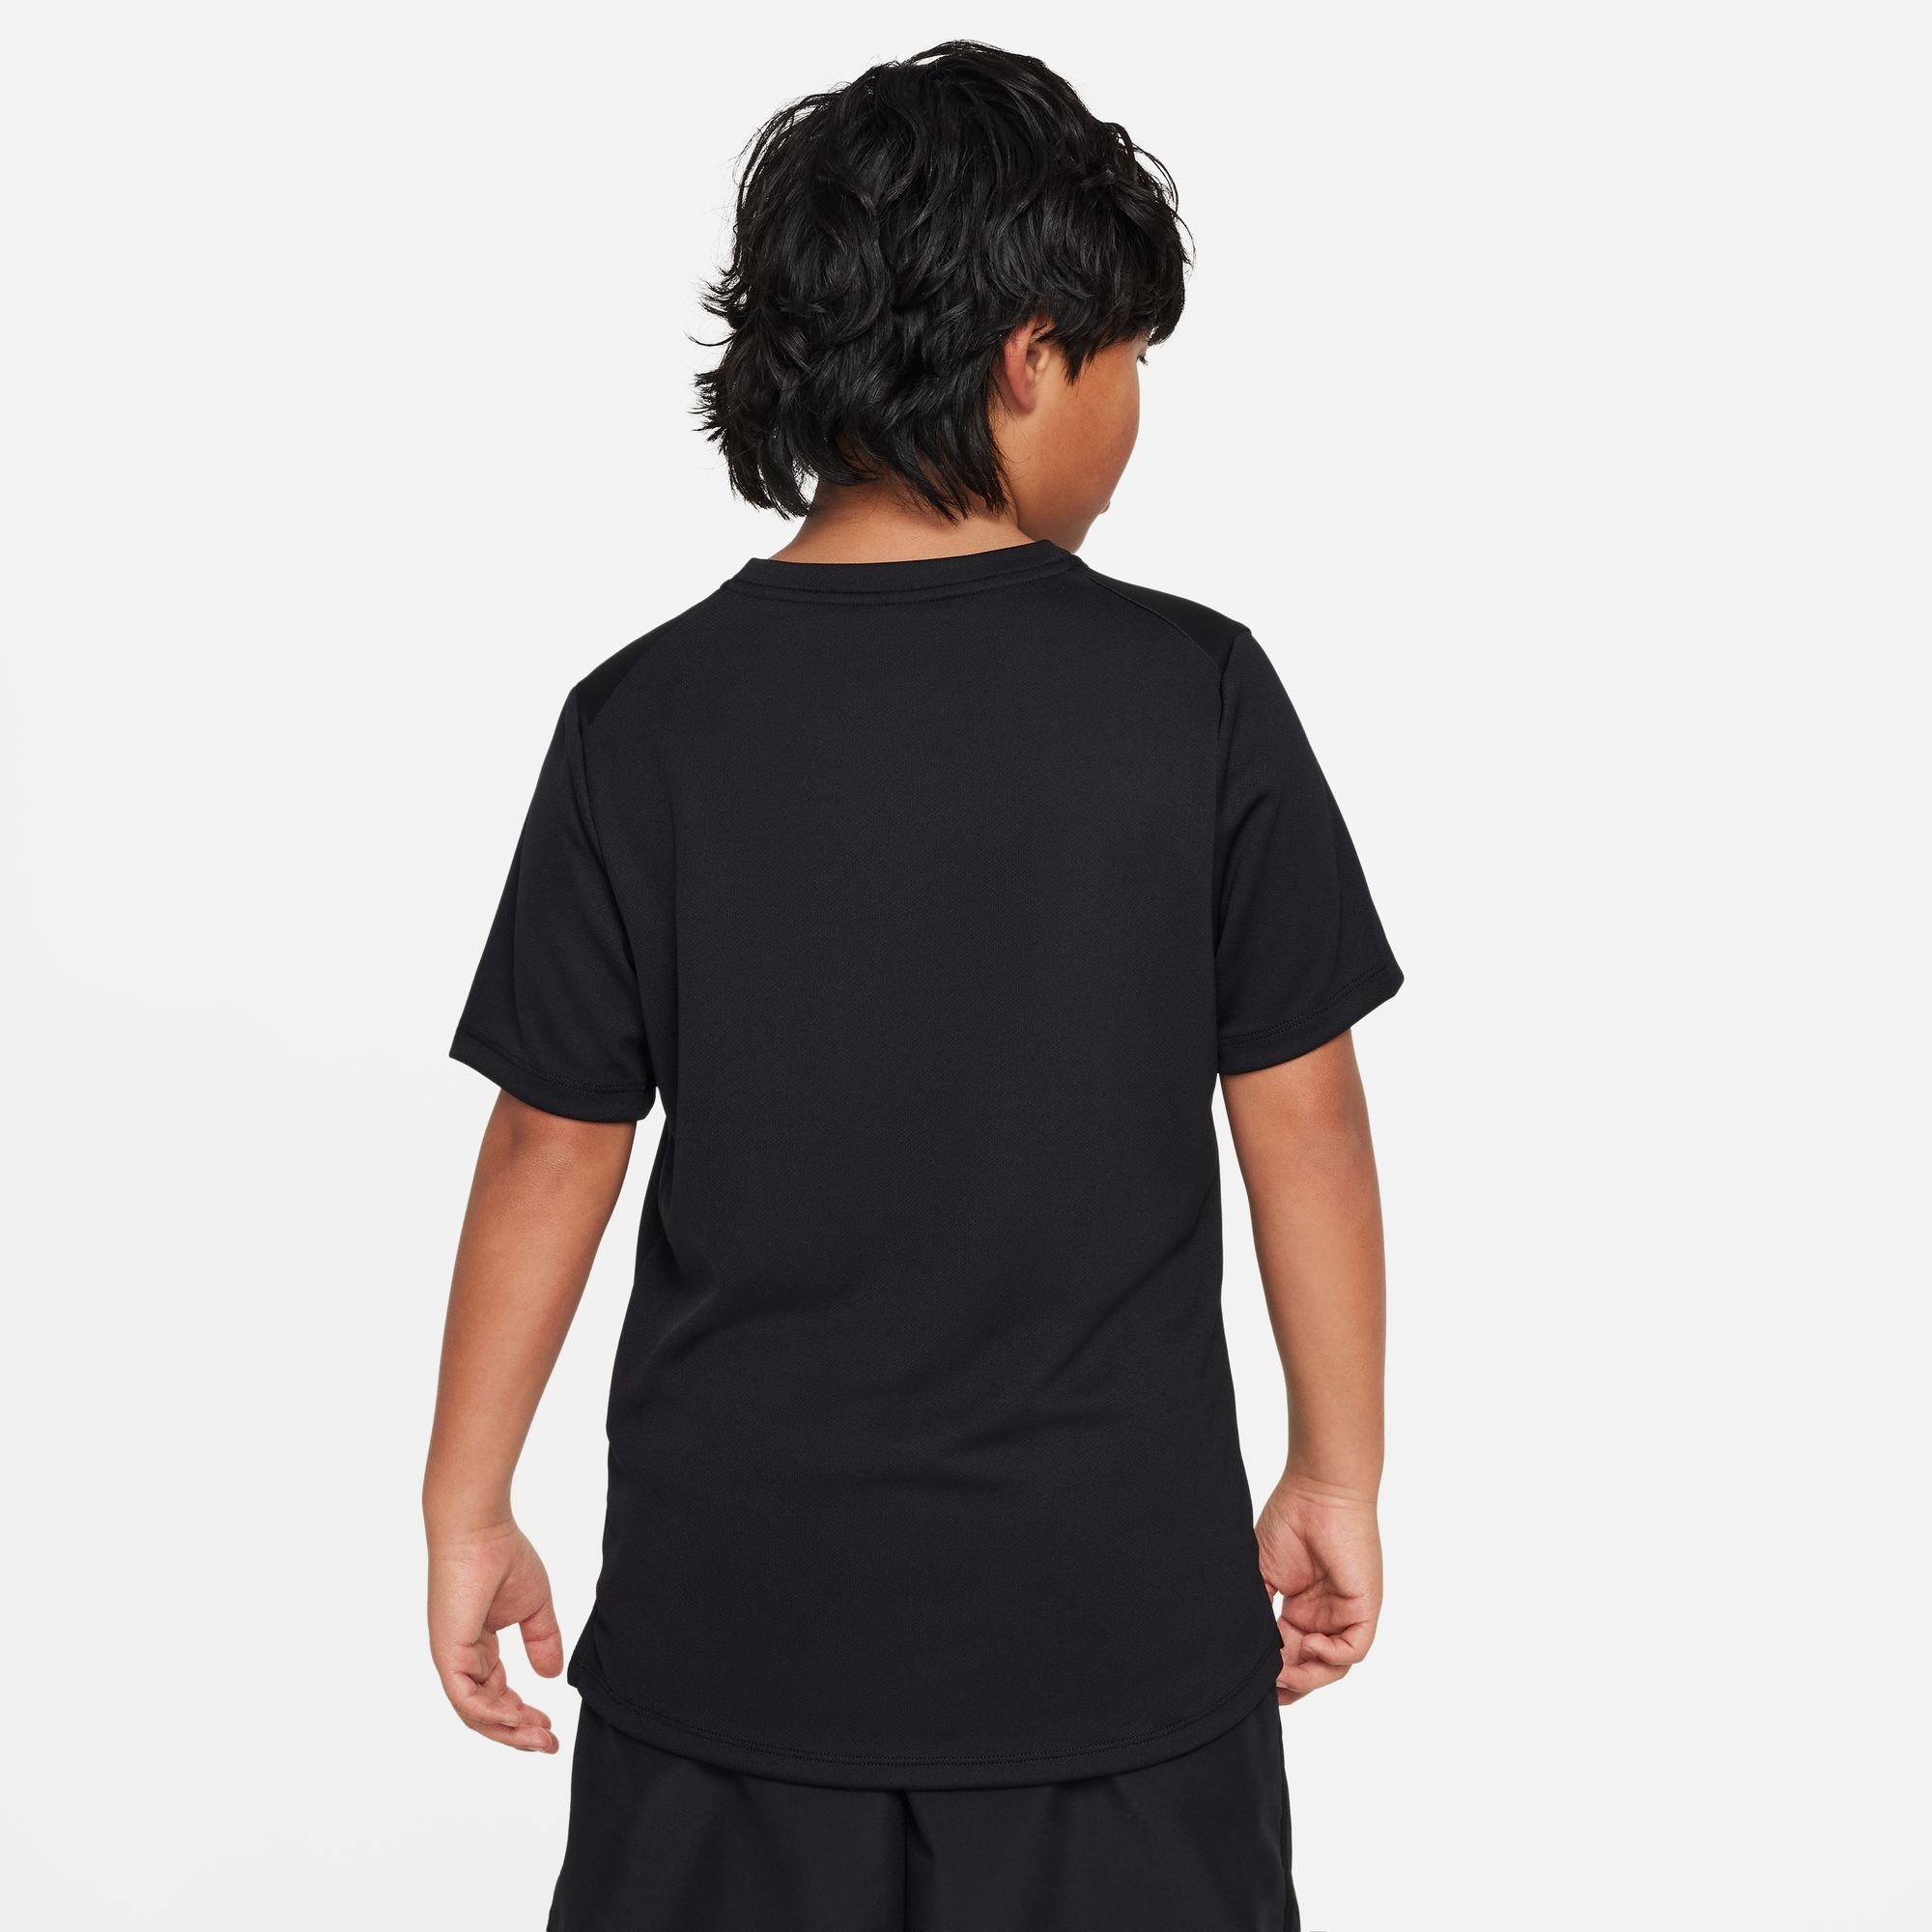 MILER KIDS' BLACK/REFLECTIVE (BOYS) BIG Nike DRI-FIT TOP SHORT-SLEEVE SILV TRAINING Trainingsshirt